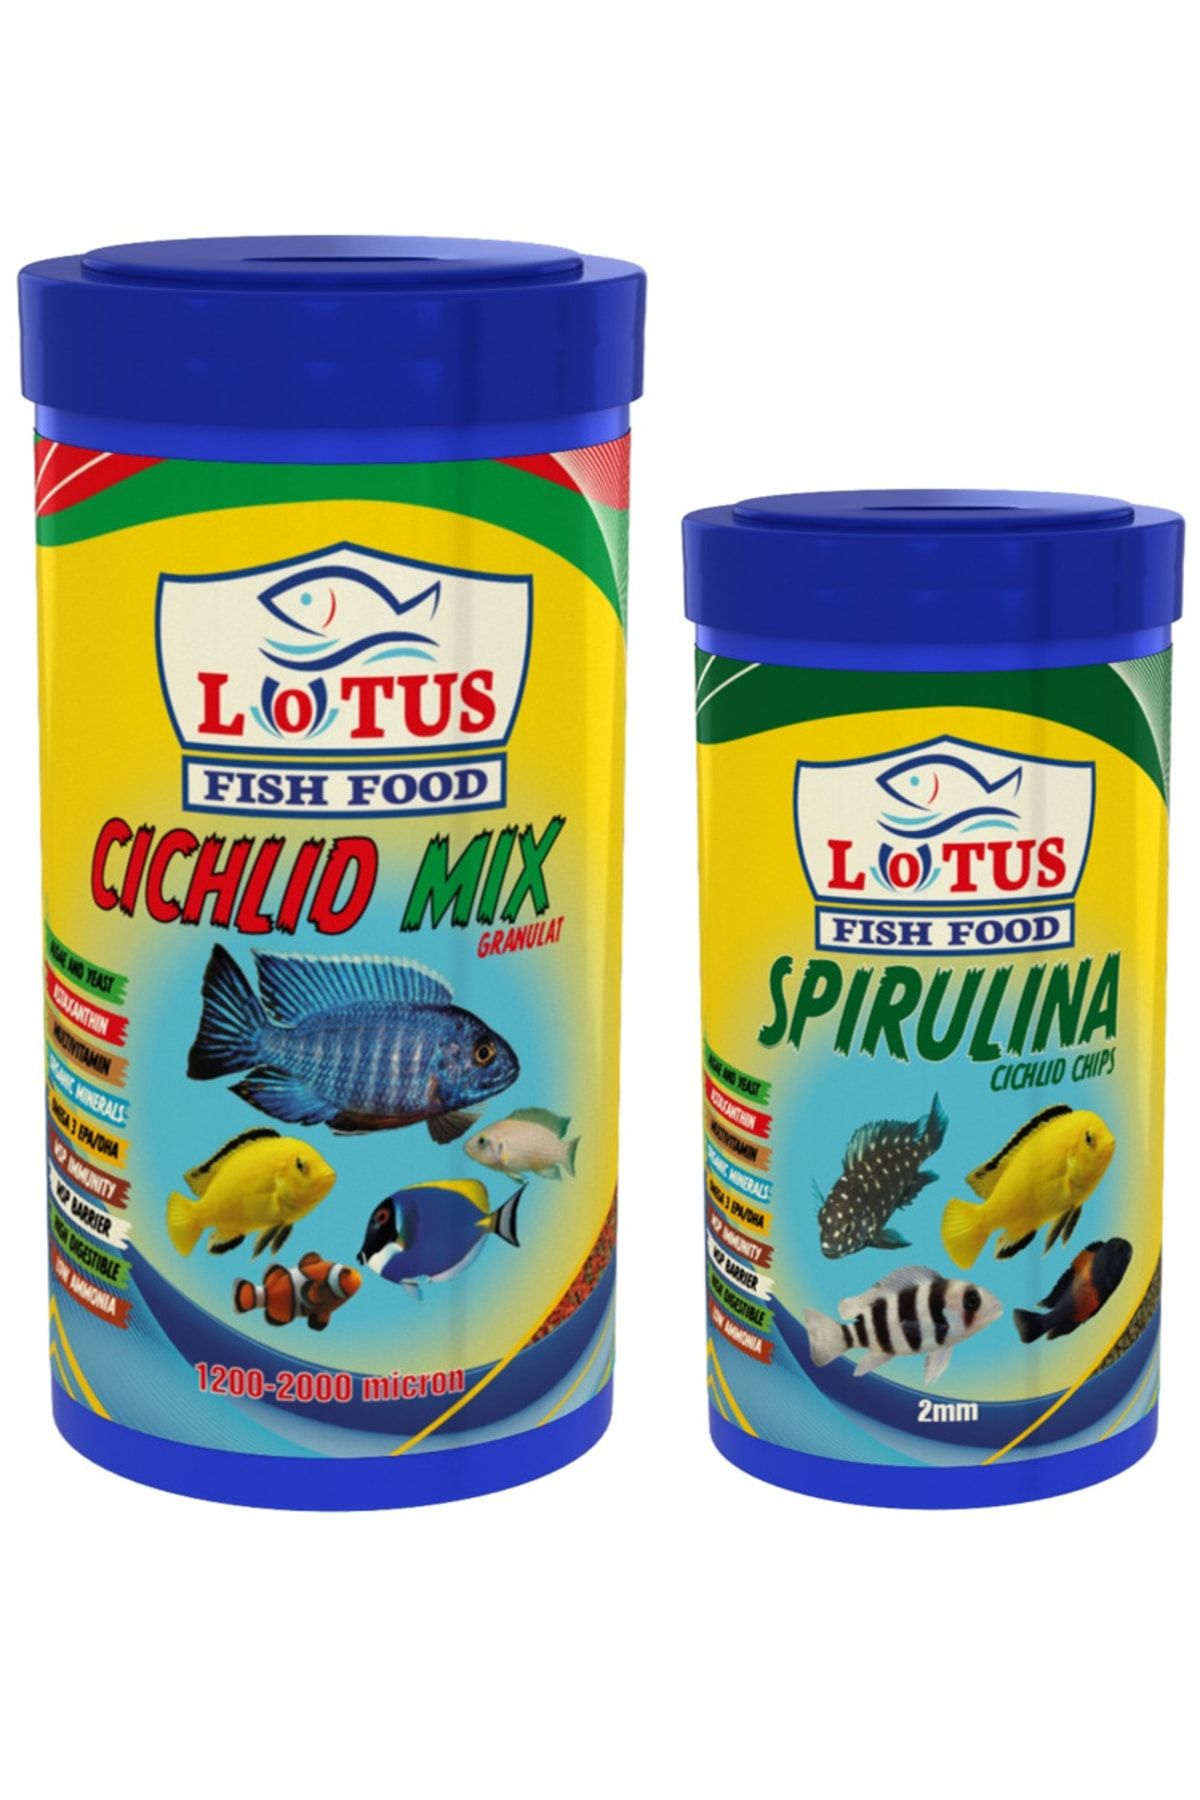 Lotus Cichlid Mix 1000 Ml + Spirulina 250 Ml Balık Yemi